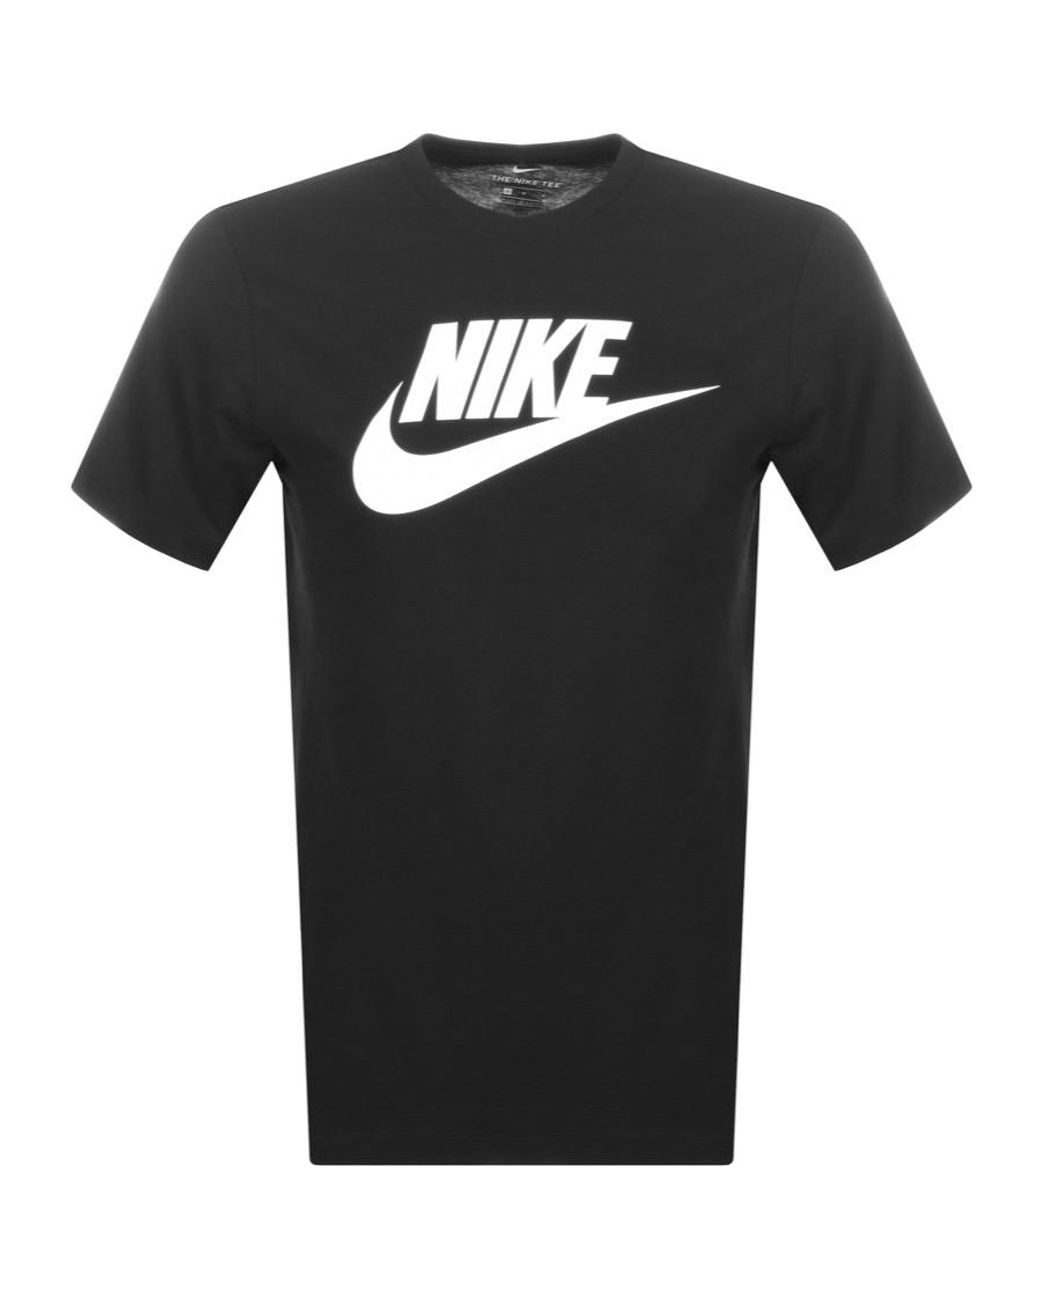 Nike Futura Icon T Shirt Black in White for Men - Lyst